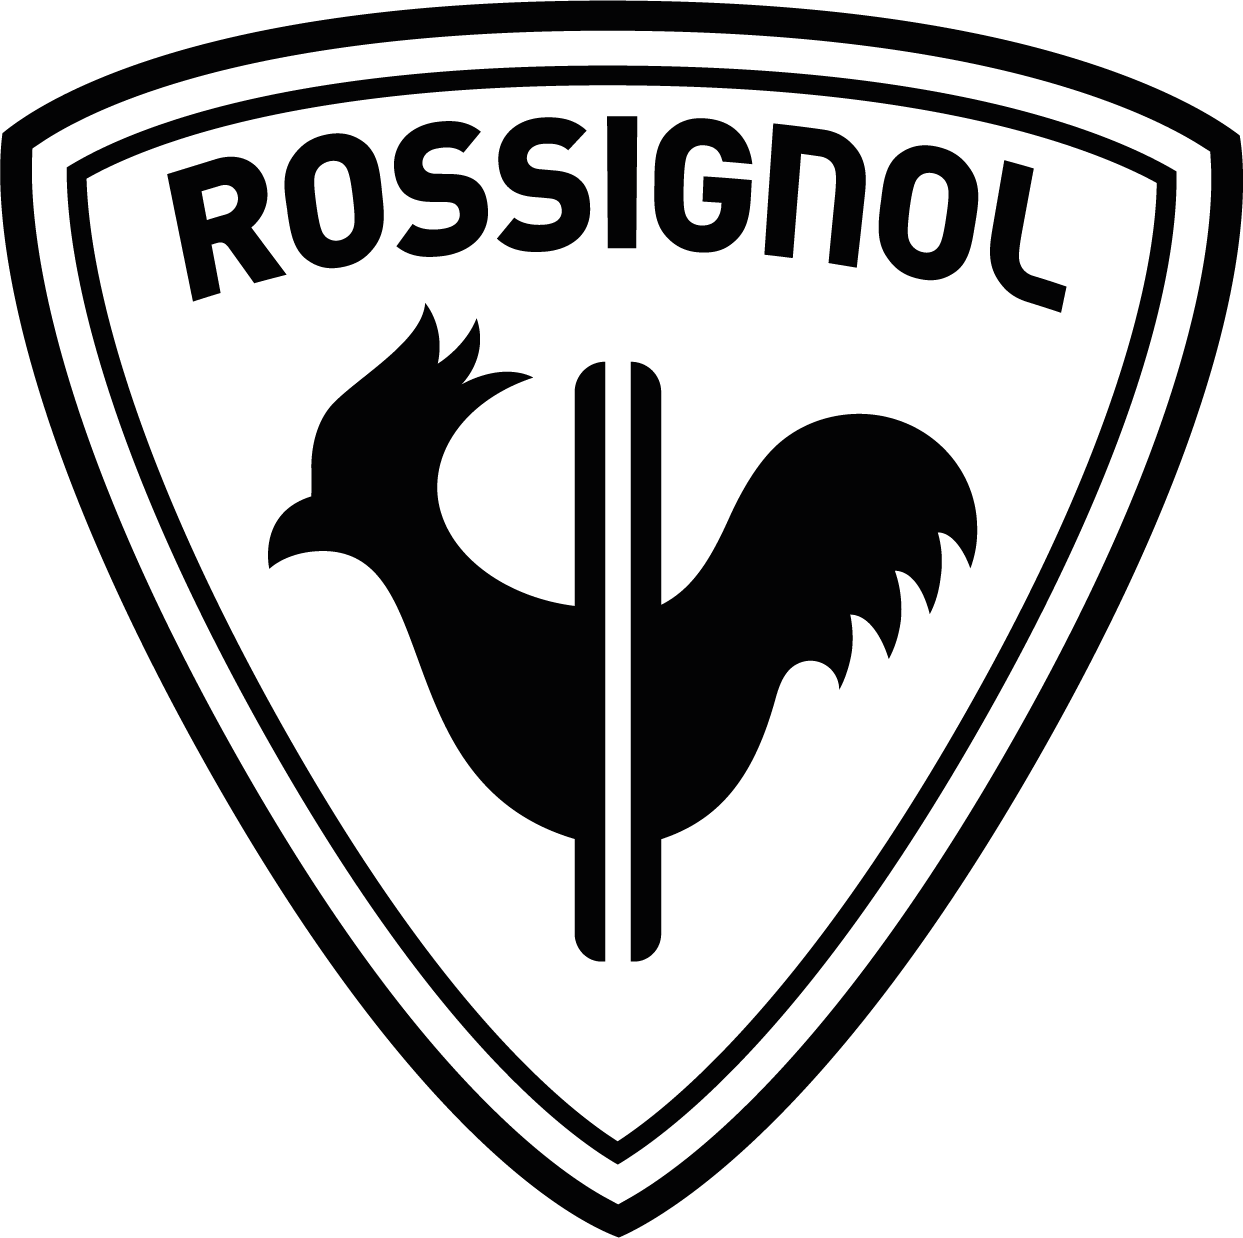 www.rossignol.com